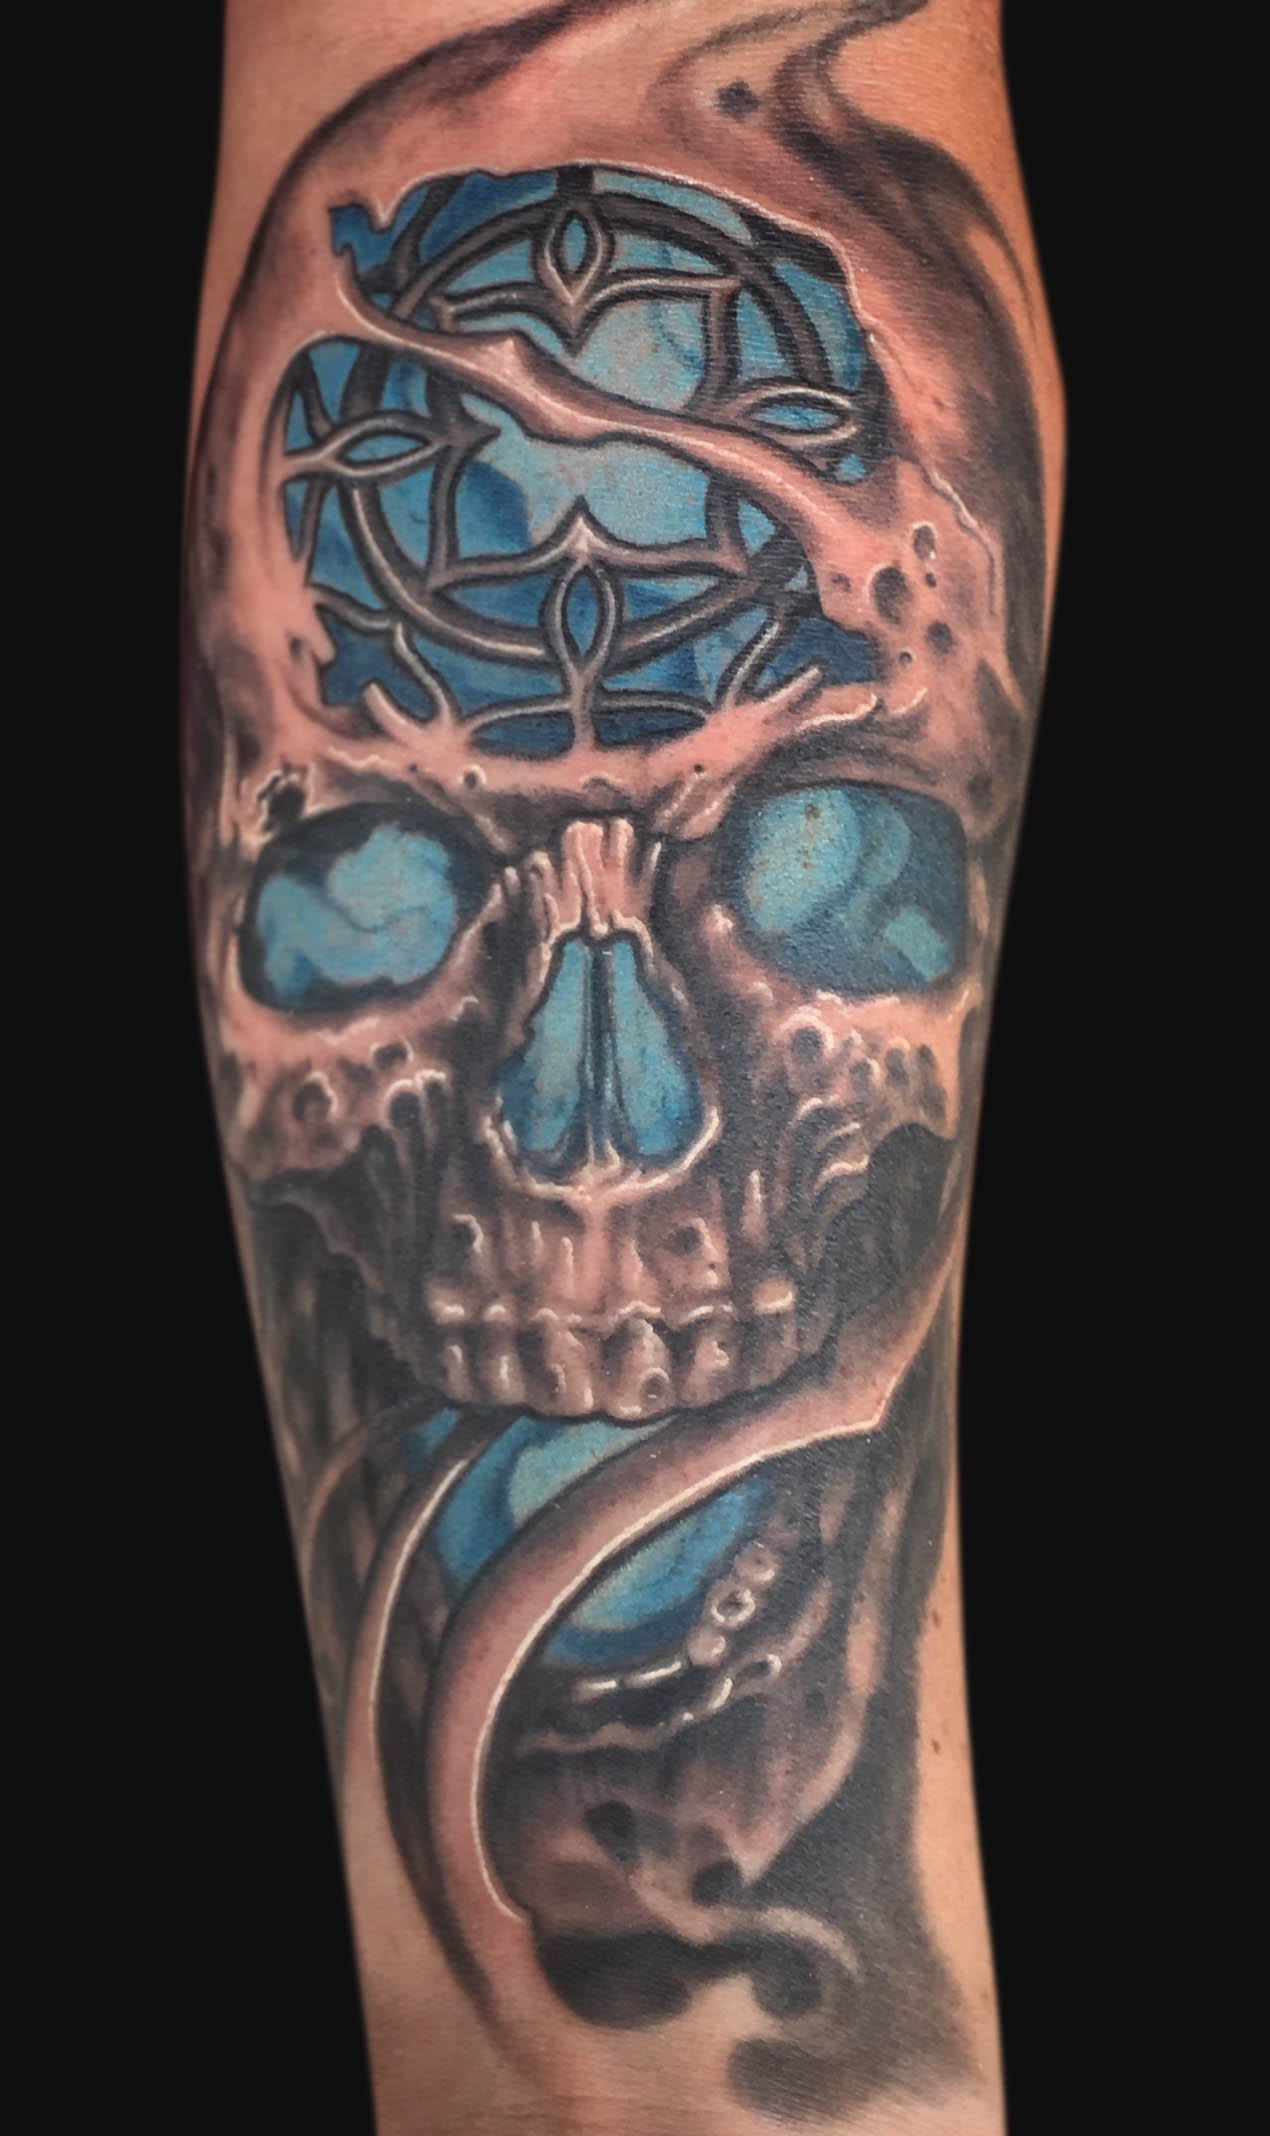 Unique Skull Tattoo On Forearm By Spencer Caligiuri